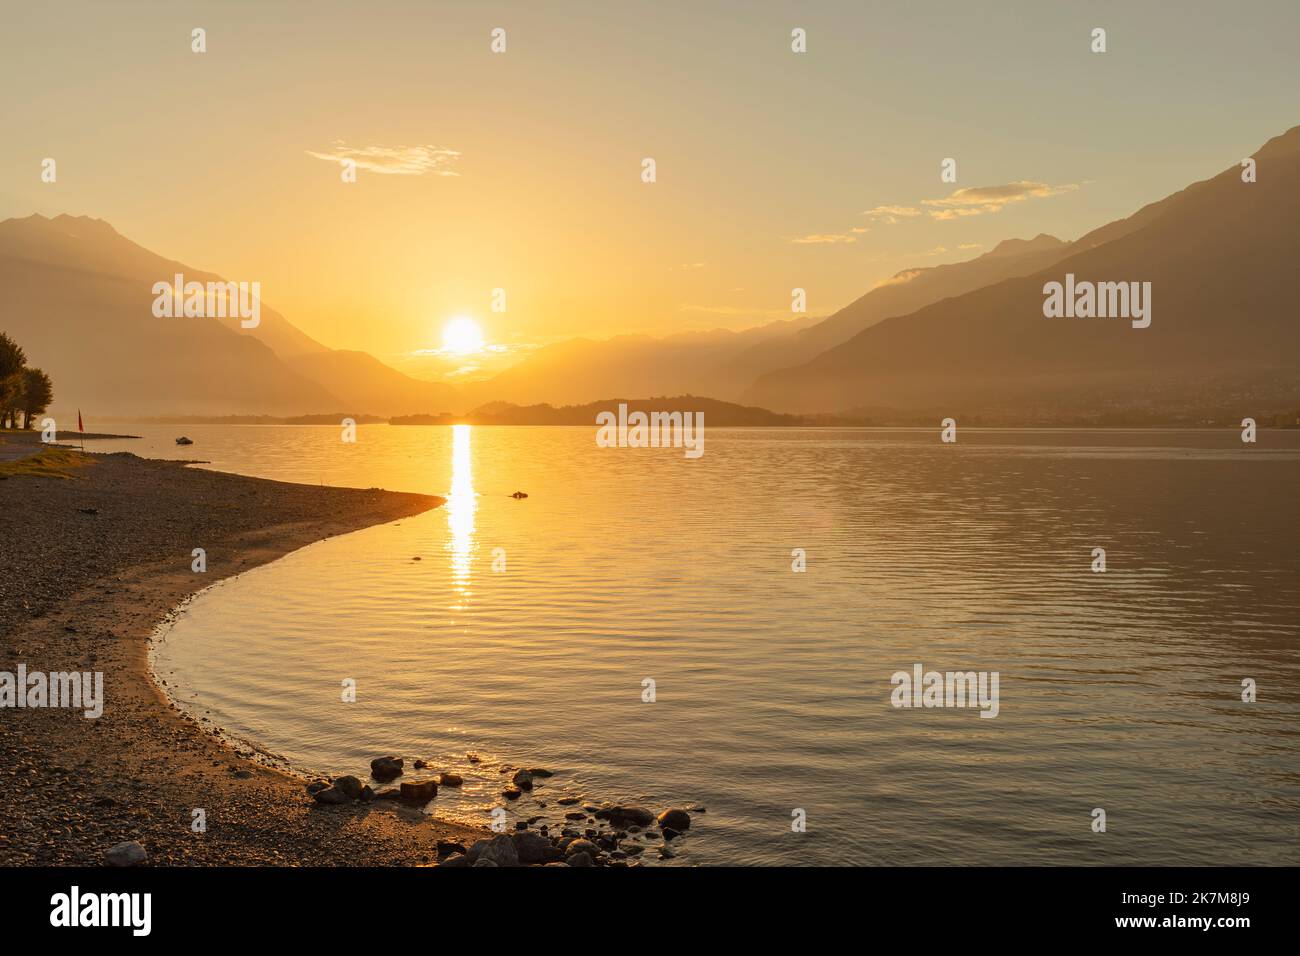 Vibrant sunrise at Domaso beach, Lake Como, looking to Valtellina valley Stock Photo